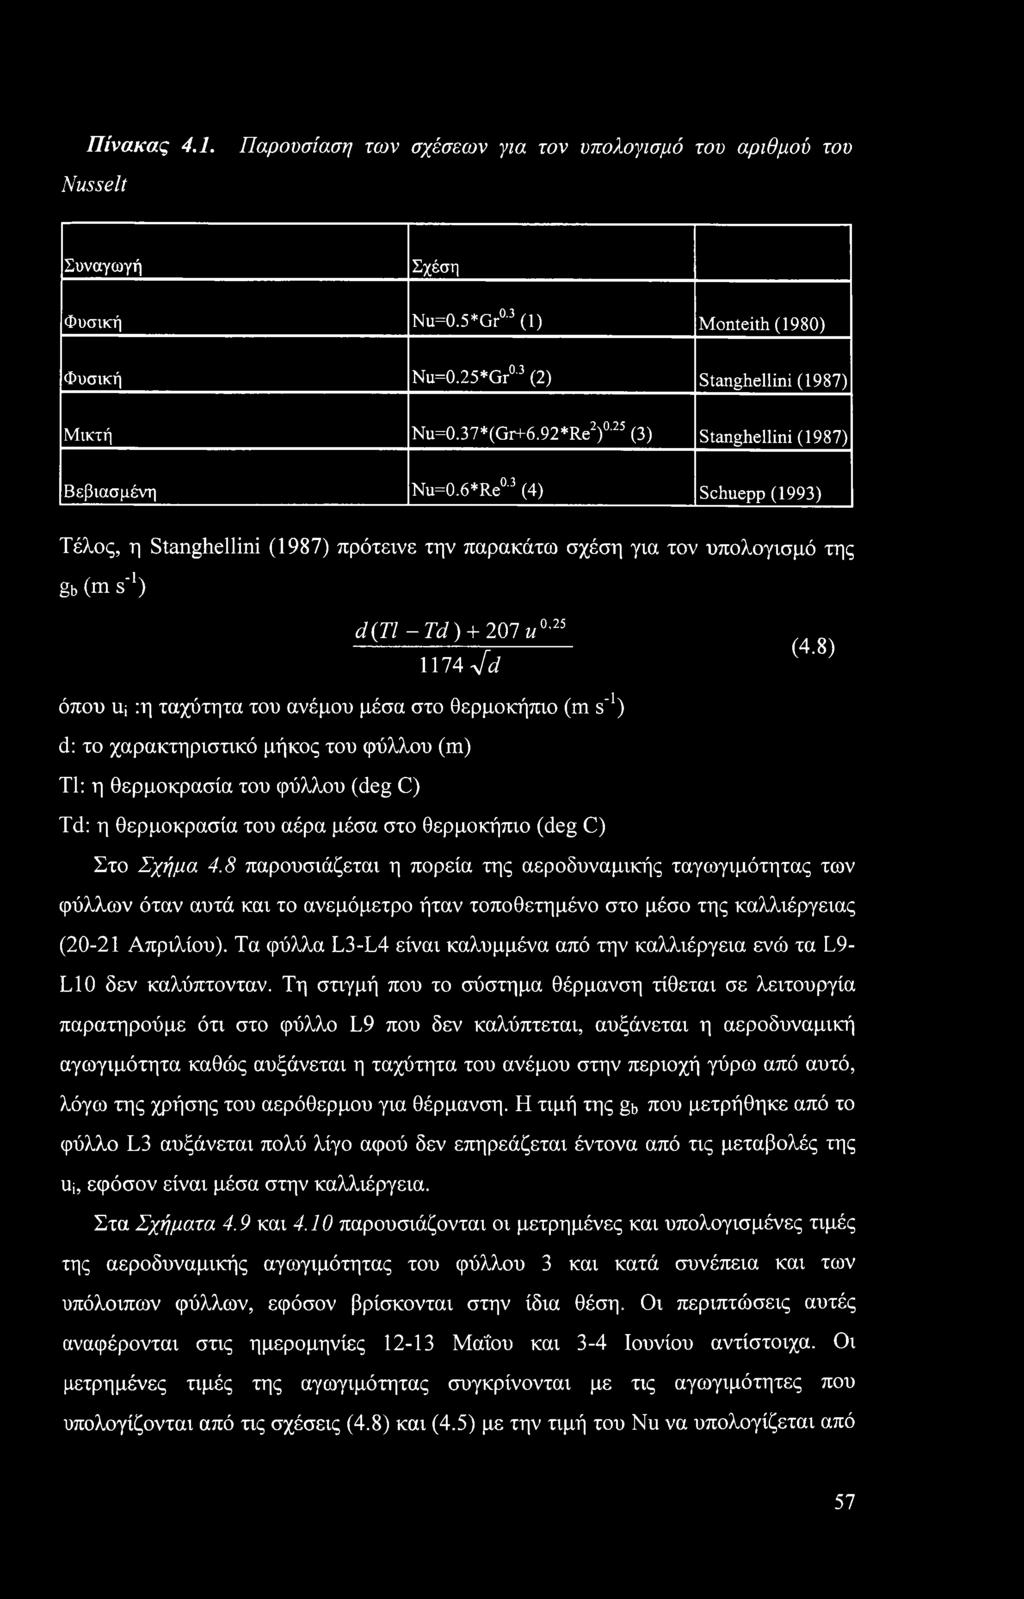 6*Re '3 (4) Schuepp (1993) Τέλος, η Stanghellini (1987) πρότεινε την παρακάτω σχέση για τον υπολογισμό της gb (m s'1) d(tl - Td) + 207 u0,25 1174 yfd (4.